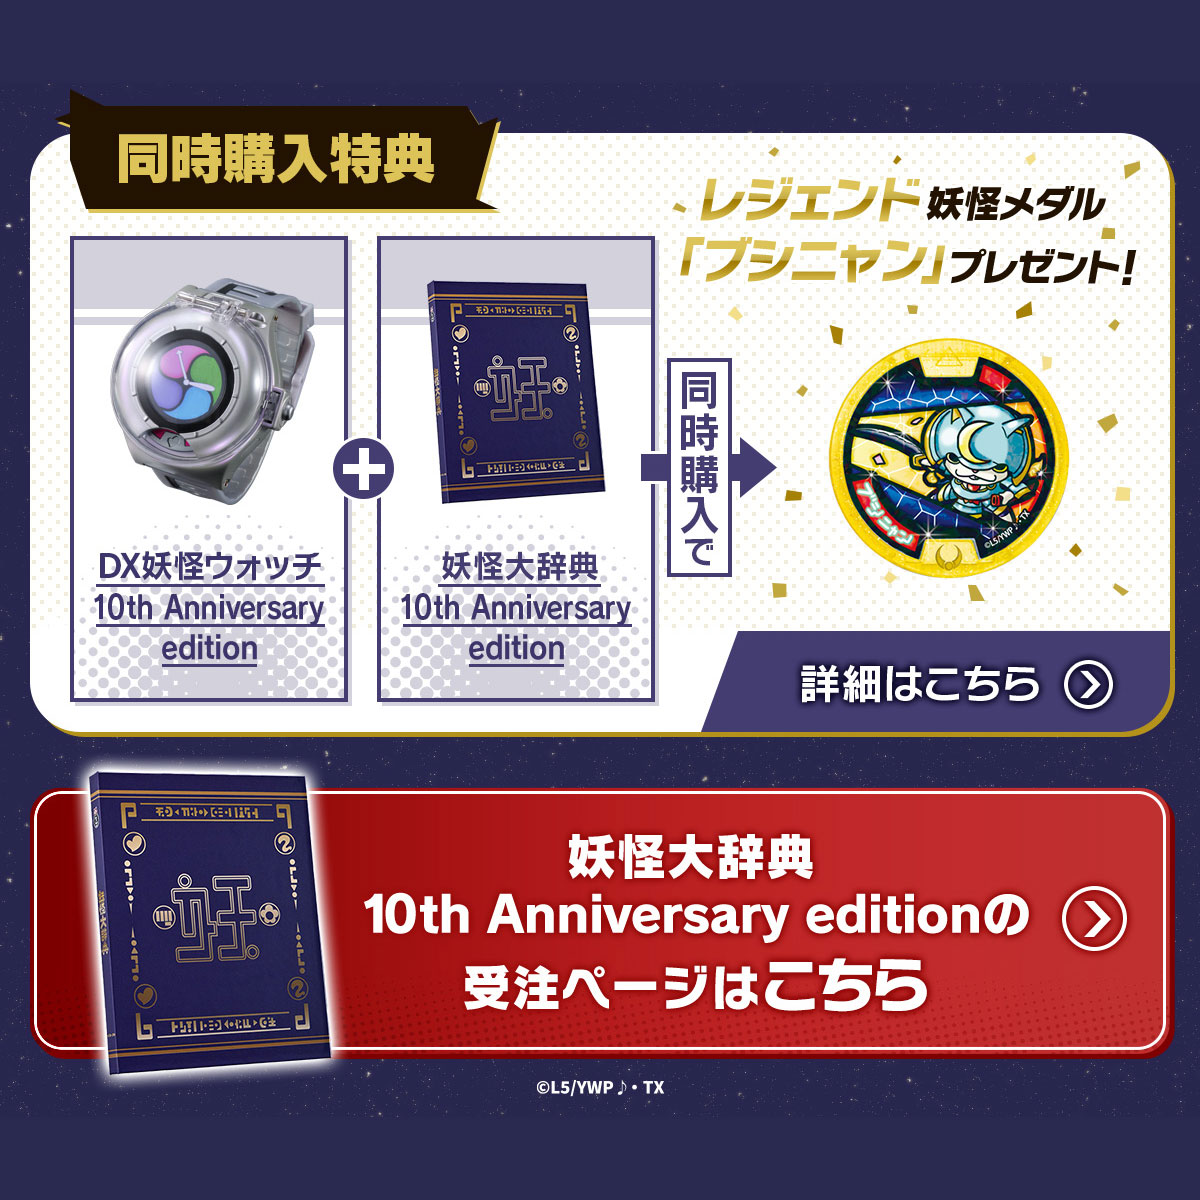 DX妖怪ウォッチ 10th Anniversary edition | BANDAI TOYS